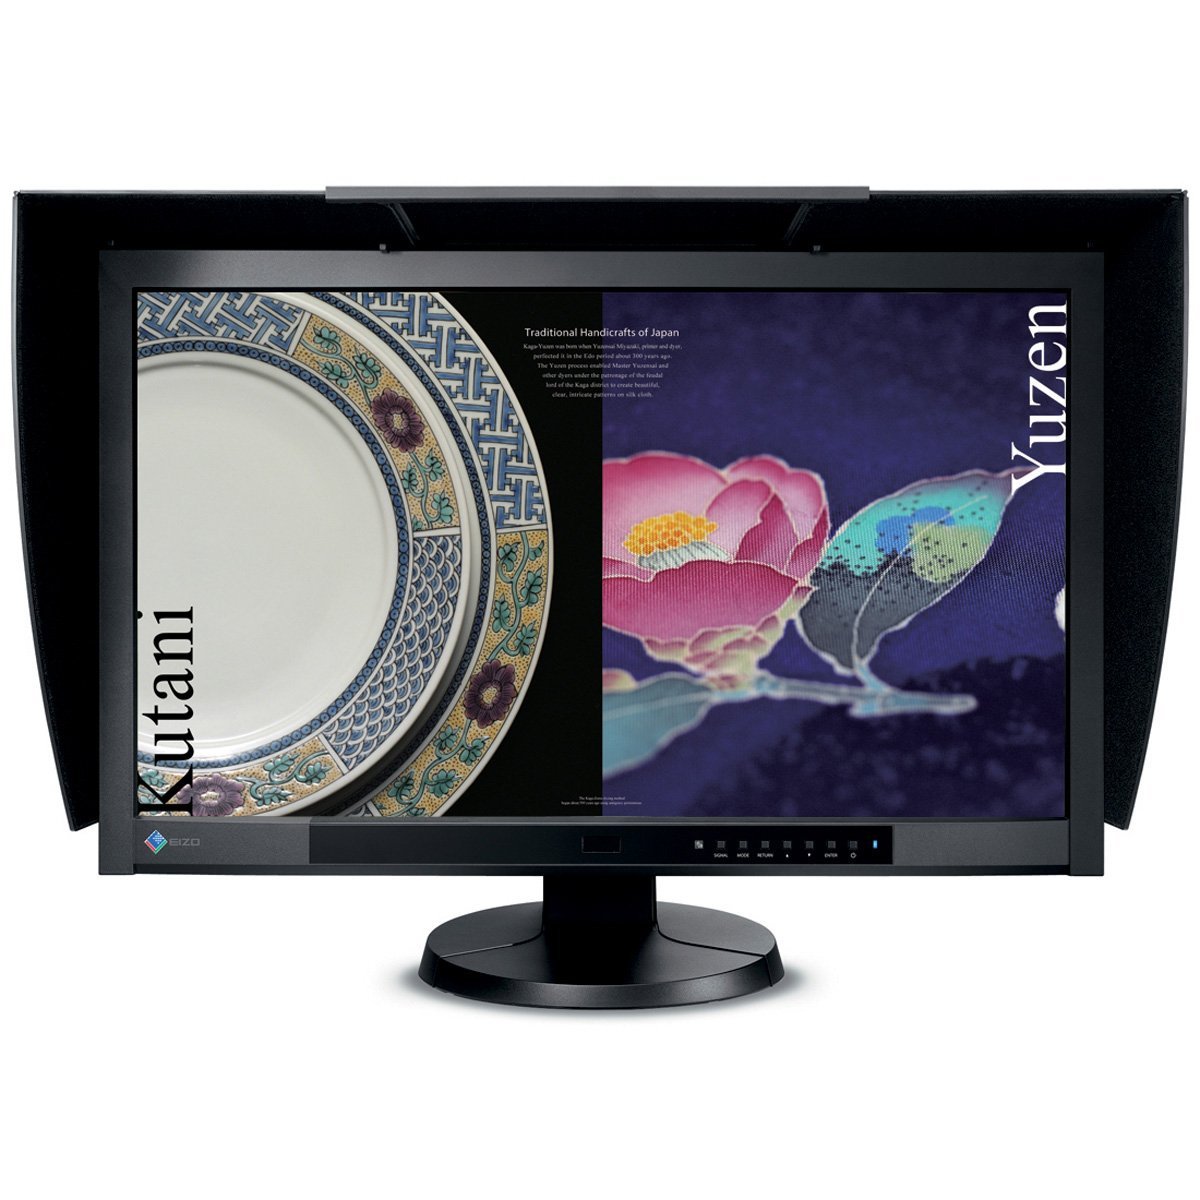 Eizo CG277-BK 27" Wide Screen/Color Gamut Self Calibrating IPS LCD Backlight Monitor, 16:9 Aspect Ratio, 300 cd/m2, 1000:1 Contrast Ratio, 2560x1440